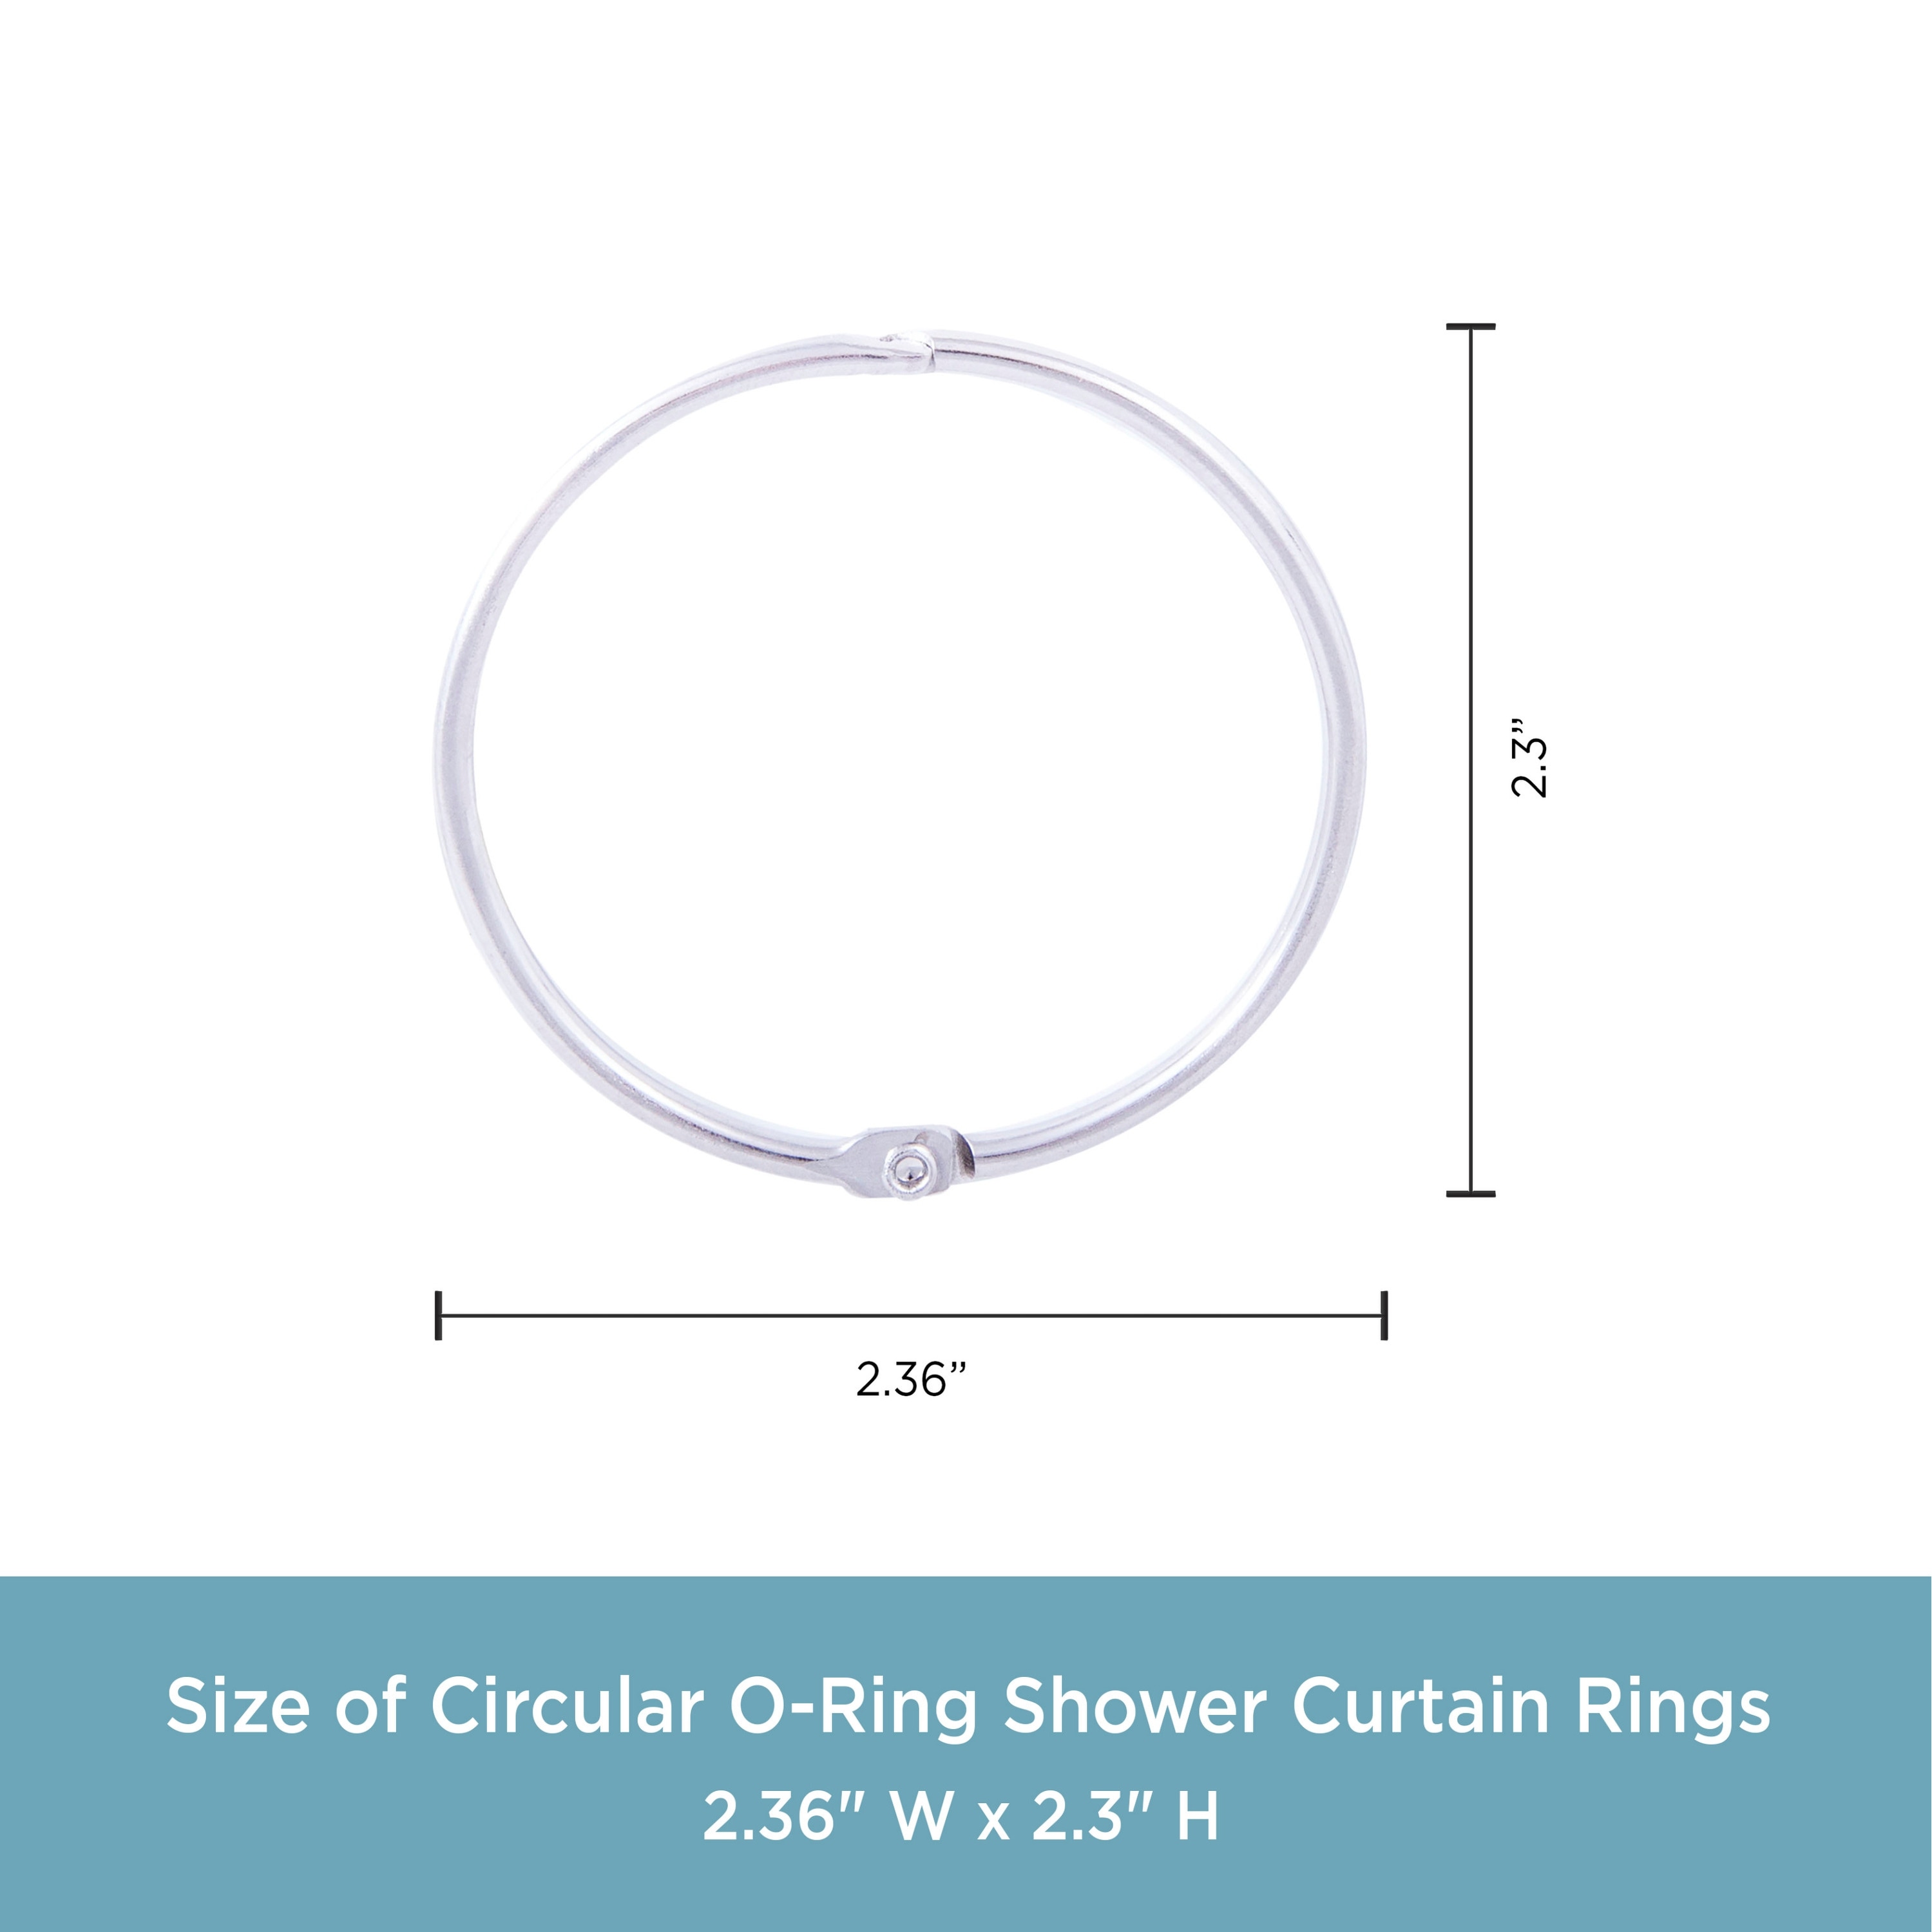 Kenney Circular O-Ring Shower Curtain Rings, Set of 12 - Chrome